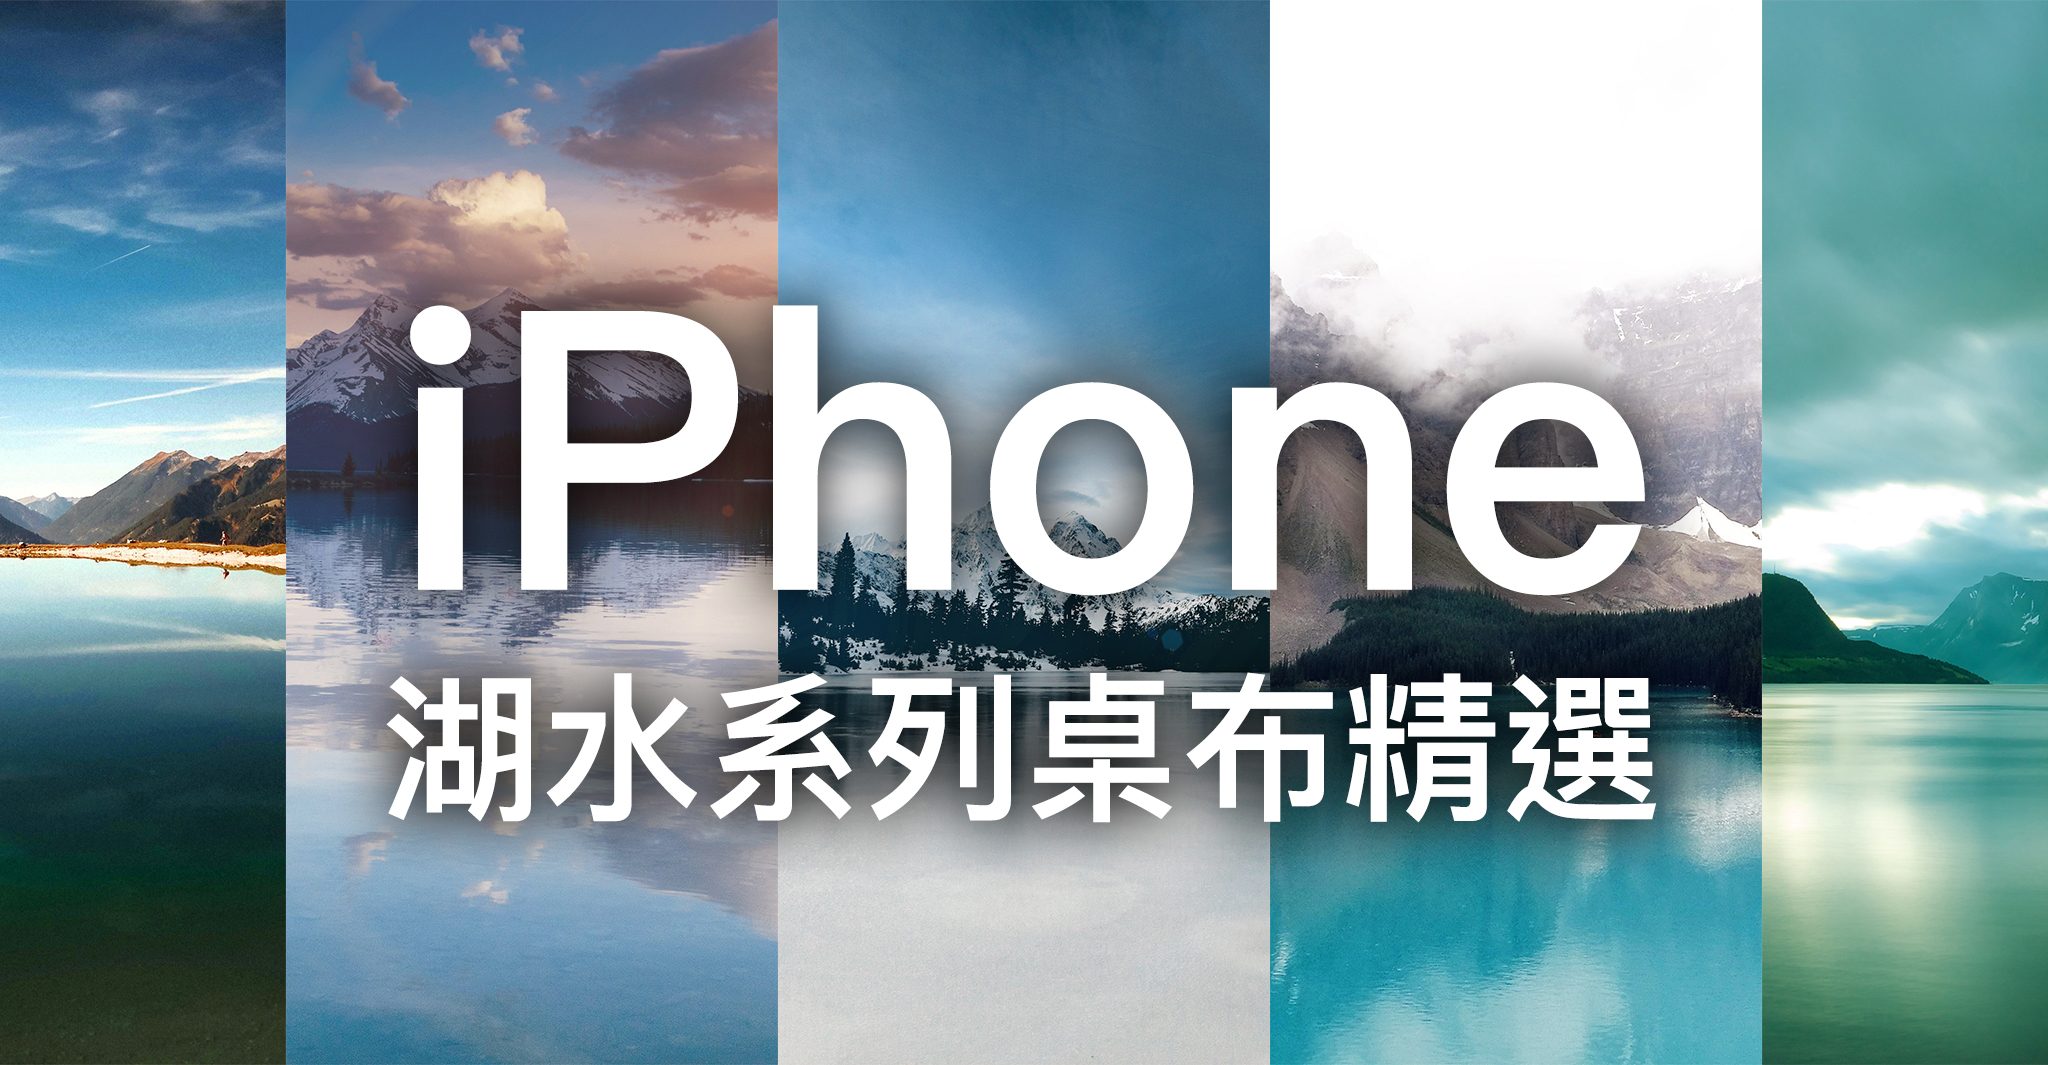 Iphone 桌布下載 精選 張湖水系列iphone 桌布 蘋果仁 你的科技媒體